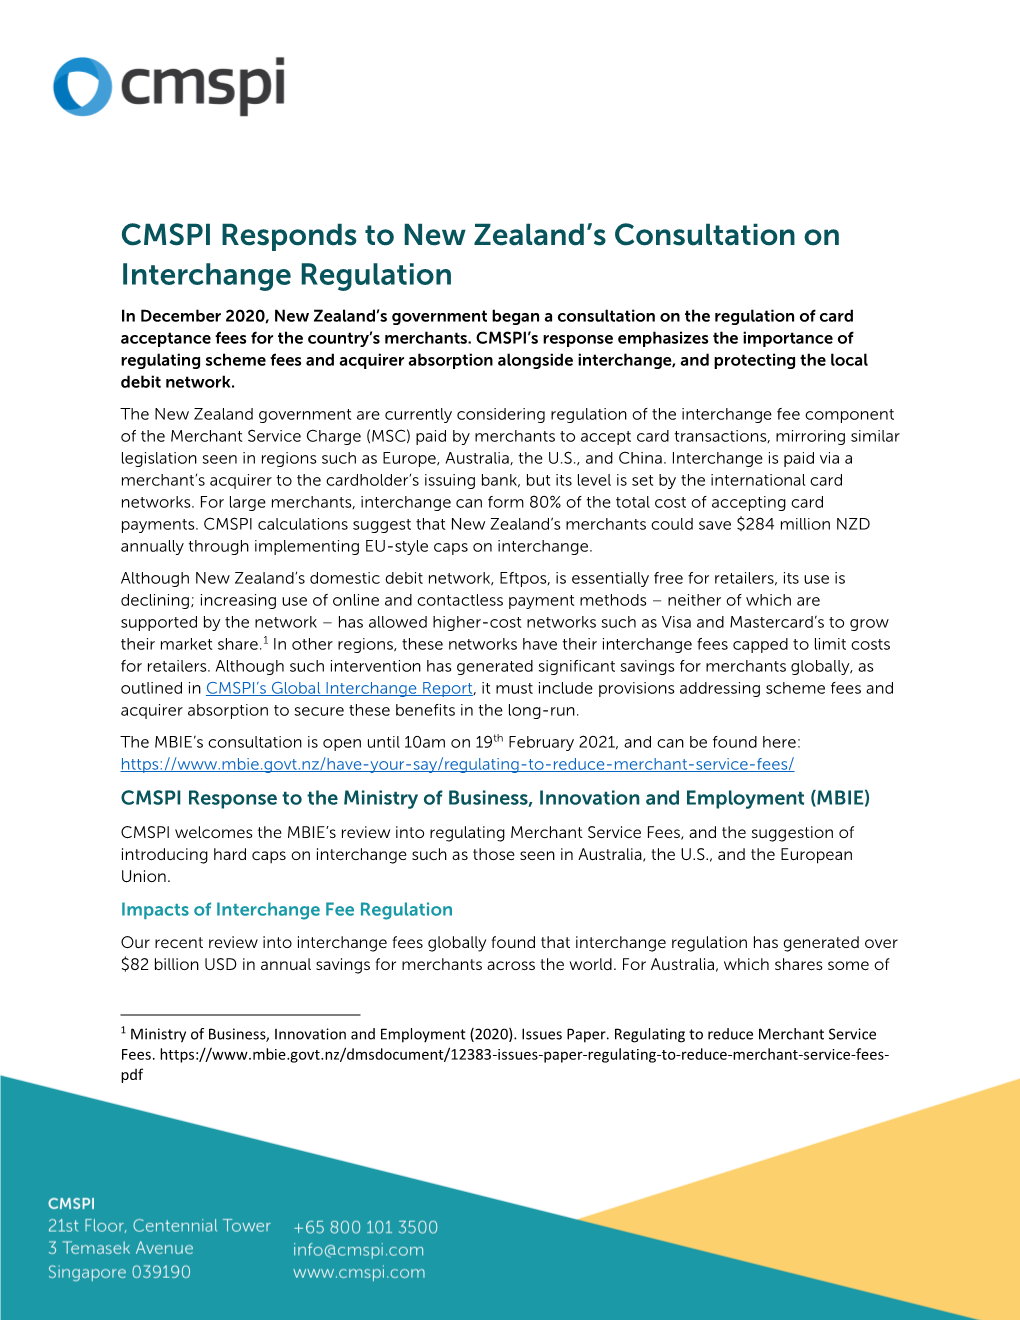 CMSPI Responds to New Zealand's Consultation on Interchange